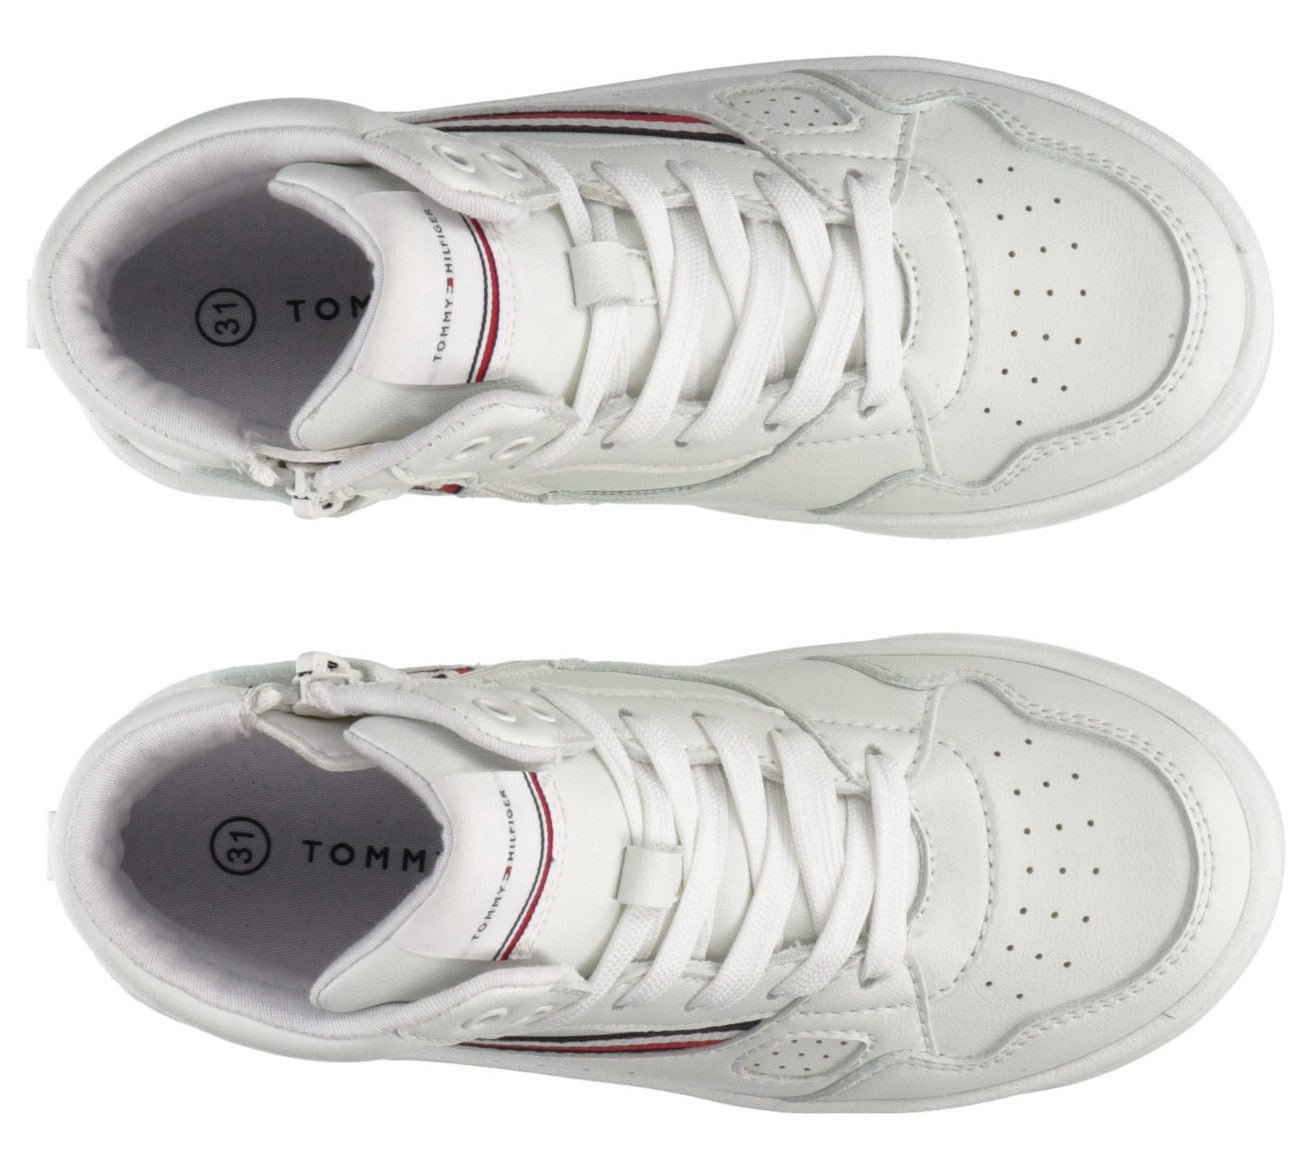 BAUR mit Logofarben »STRIPES Tommy für TOP LACE-UP in HIGH | ▷ Sneaker Textilband Hilfiger SNEAKER«,